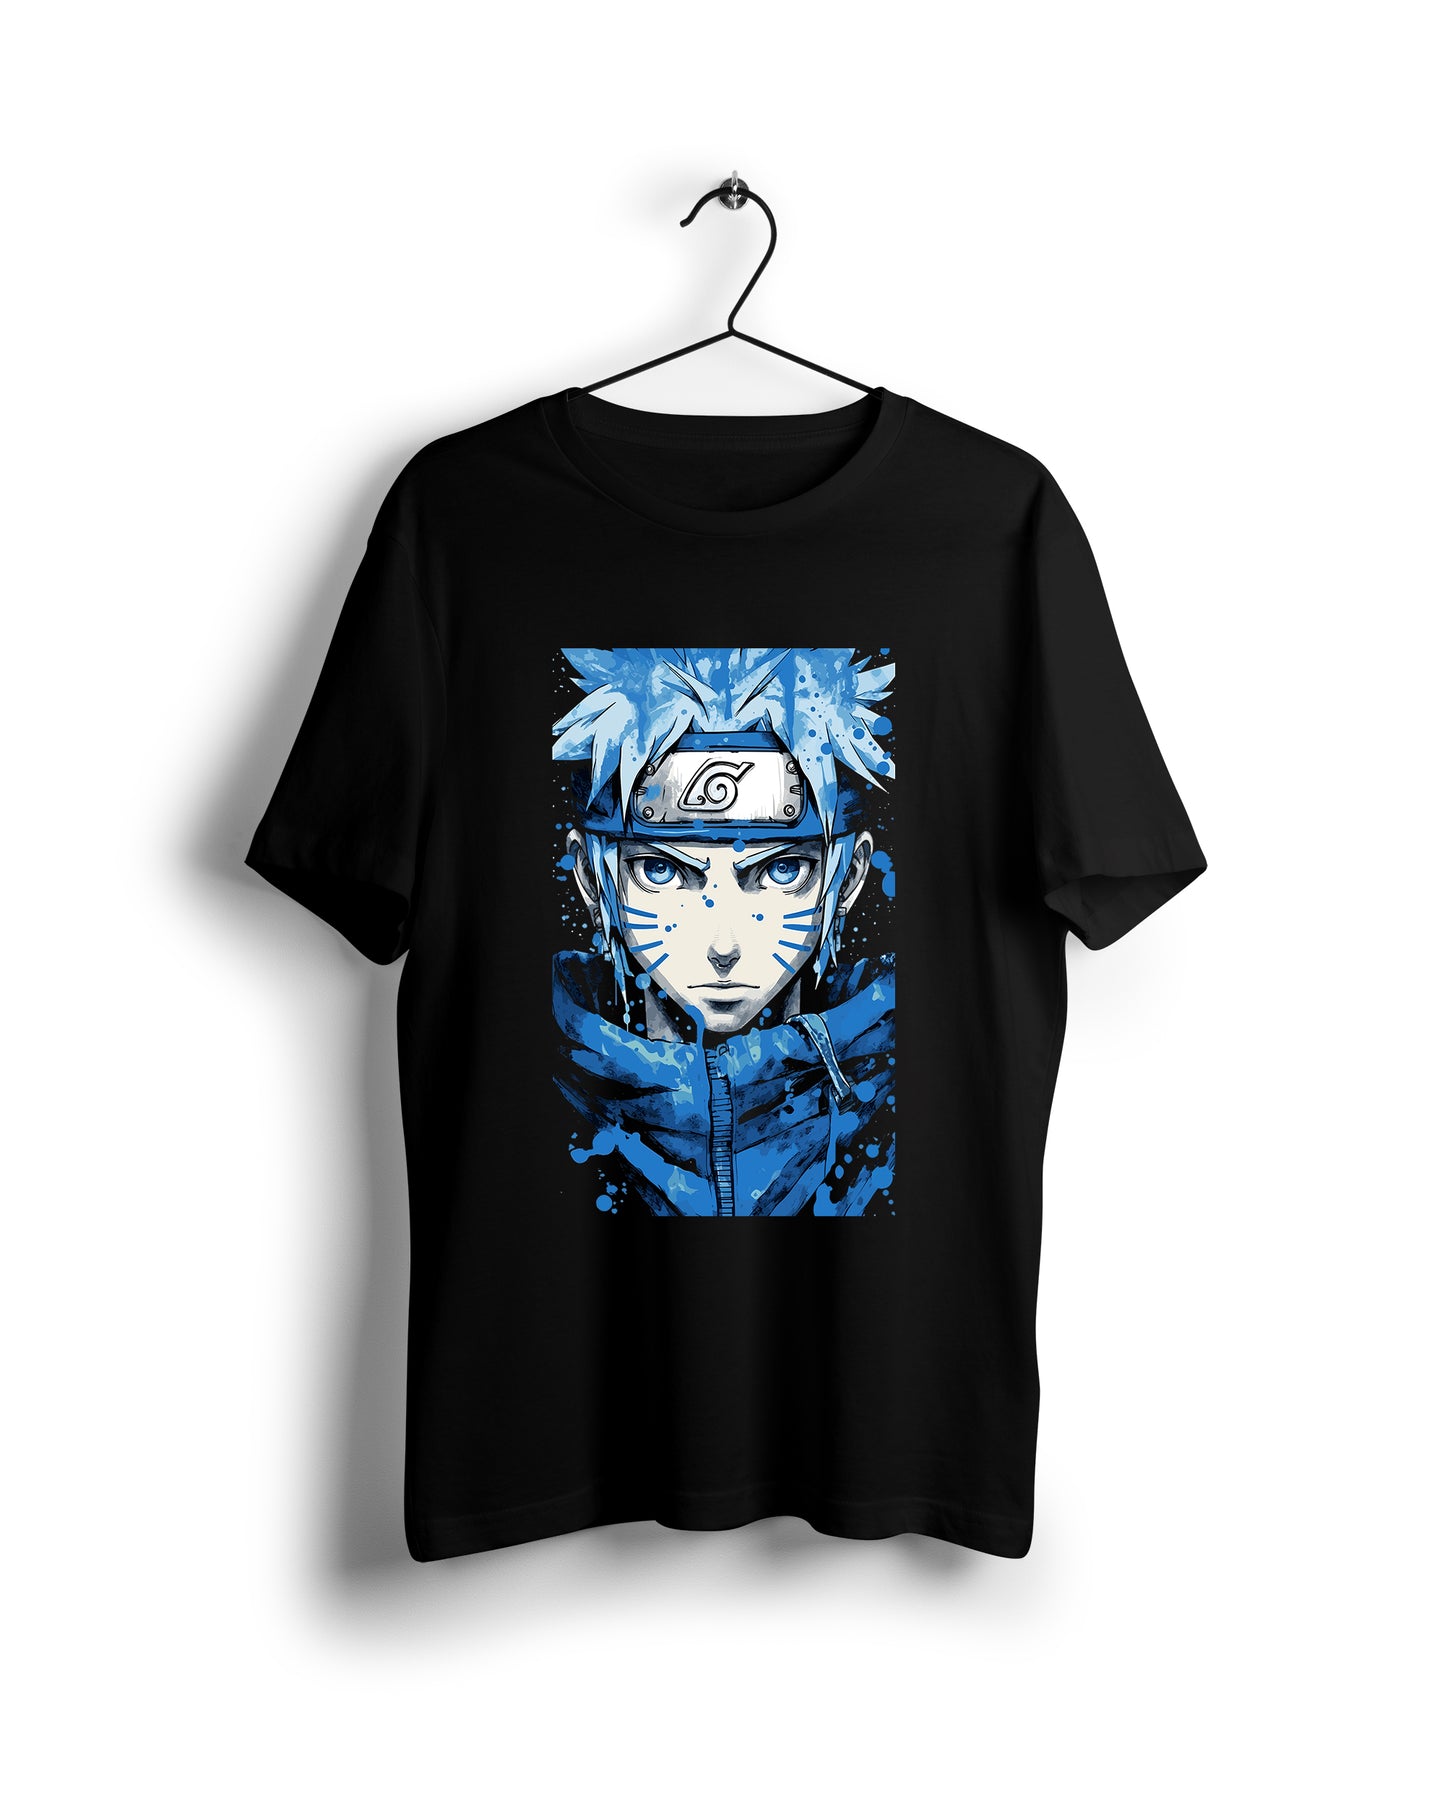 Naruto Color Splash Tee: Dan Mumford-Inspired Sky-Blue & Light Gray Design - Digital Graphics Basic T-shirt Black